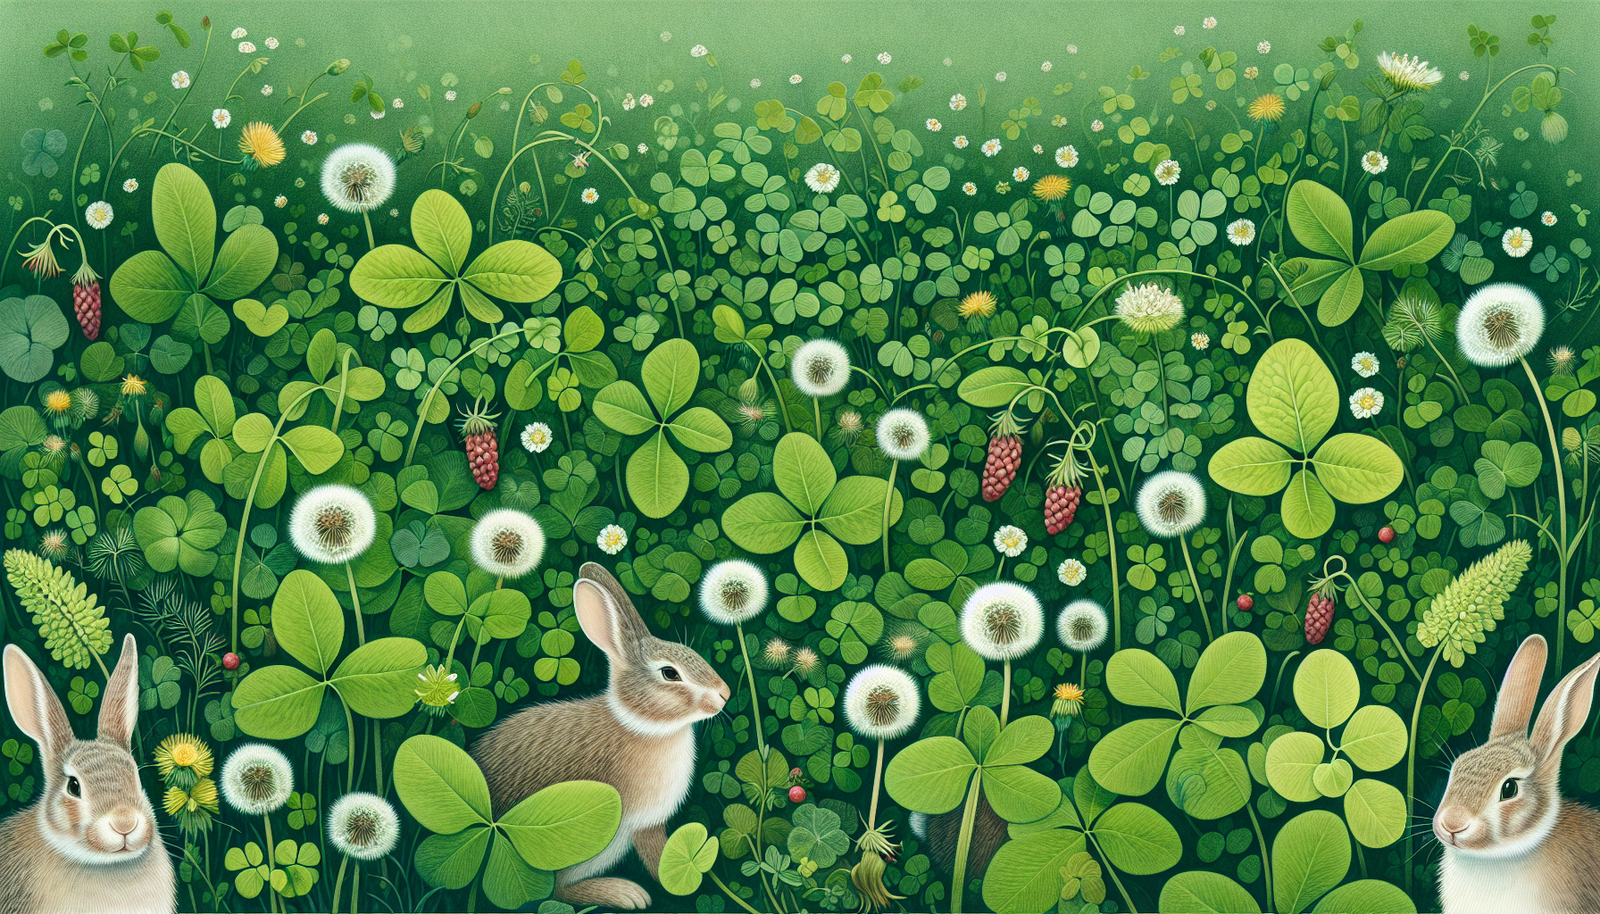 Illustration of a garden with rabbit-friendly vegetation